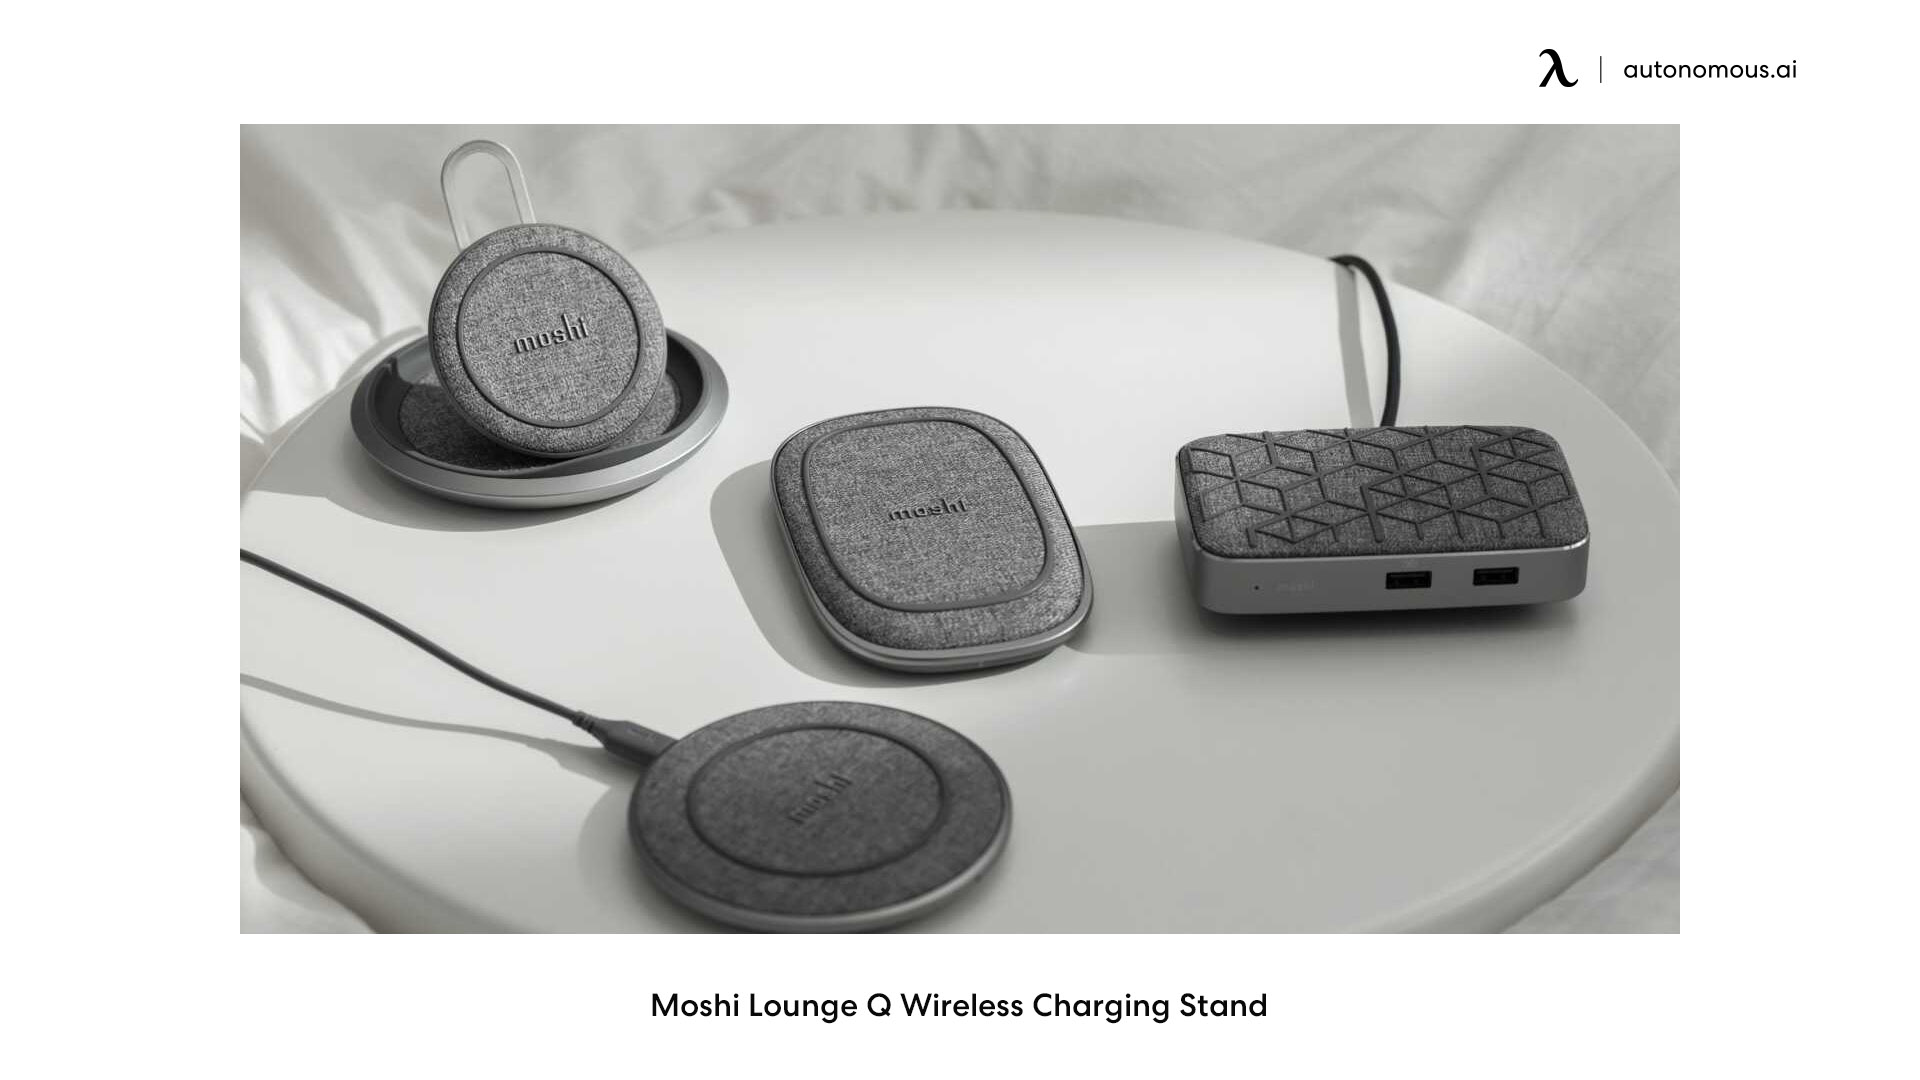 Moshi Lounge Q Wireless Charging Stand